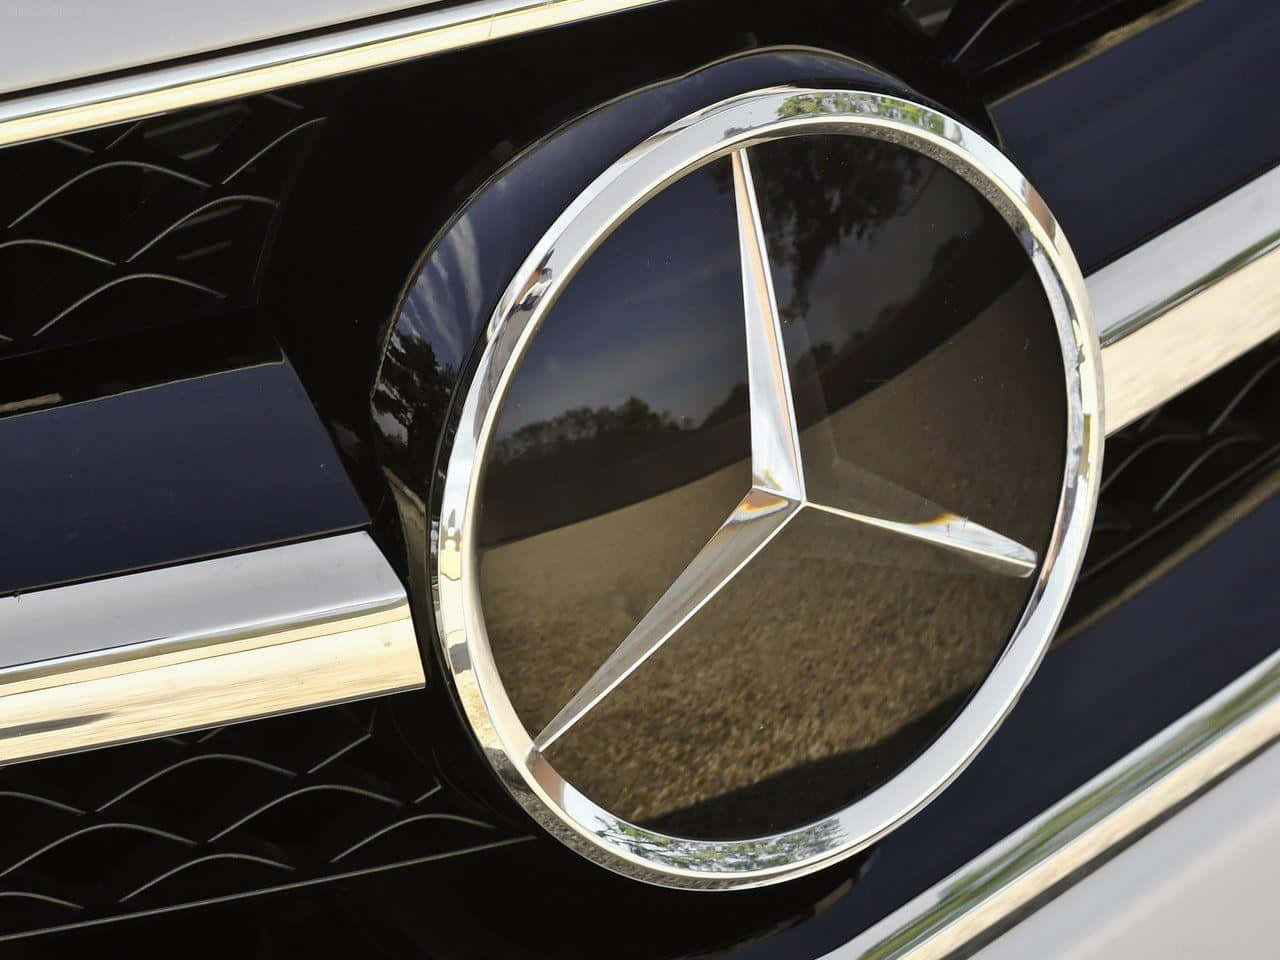 Detlegendariska Mercedes Benz-logotypen.